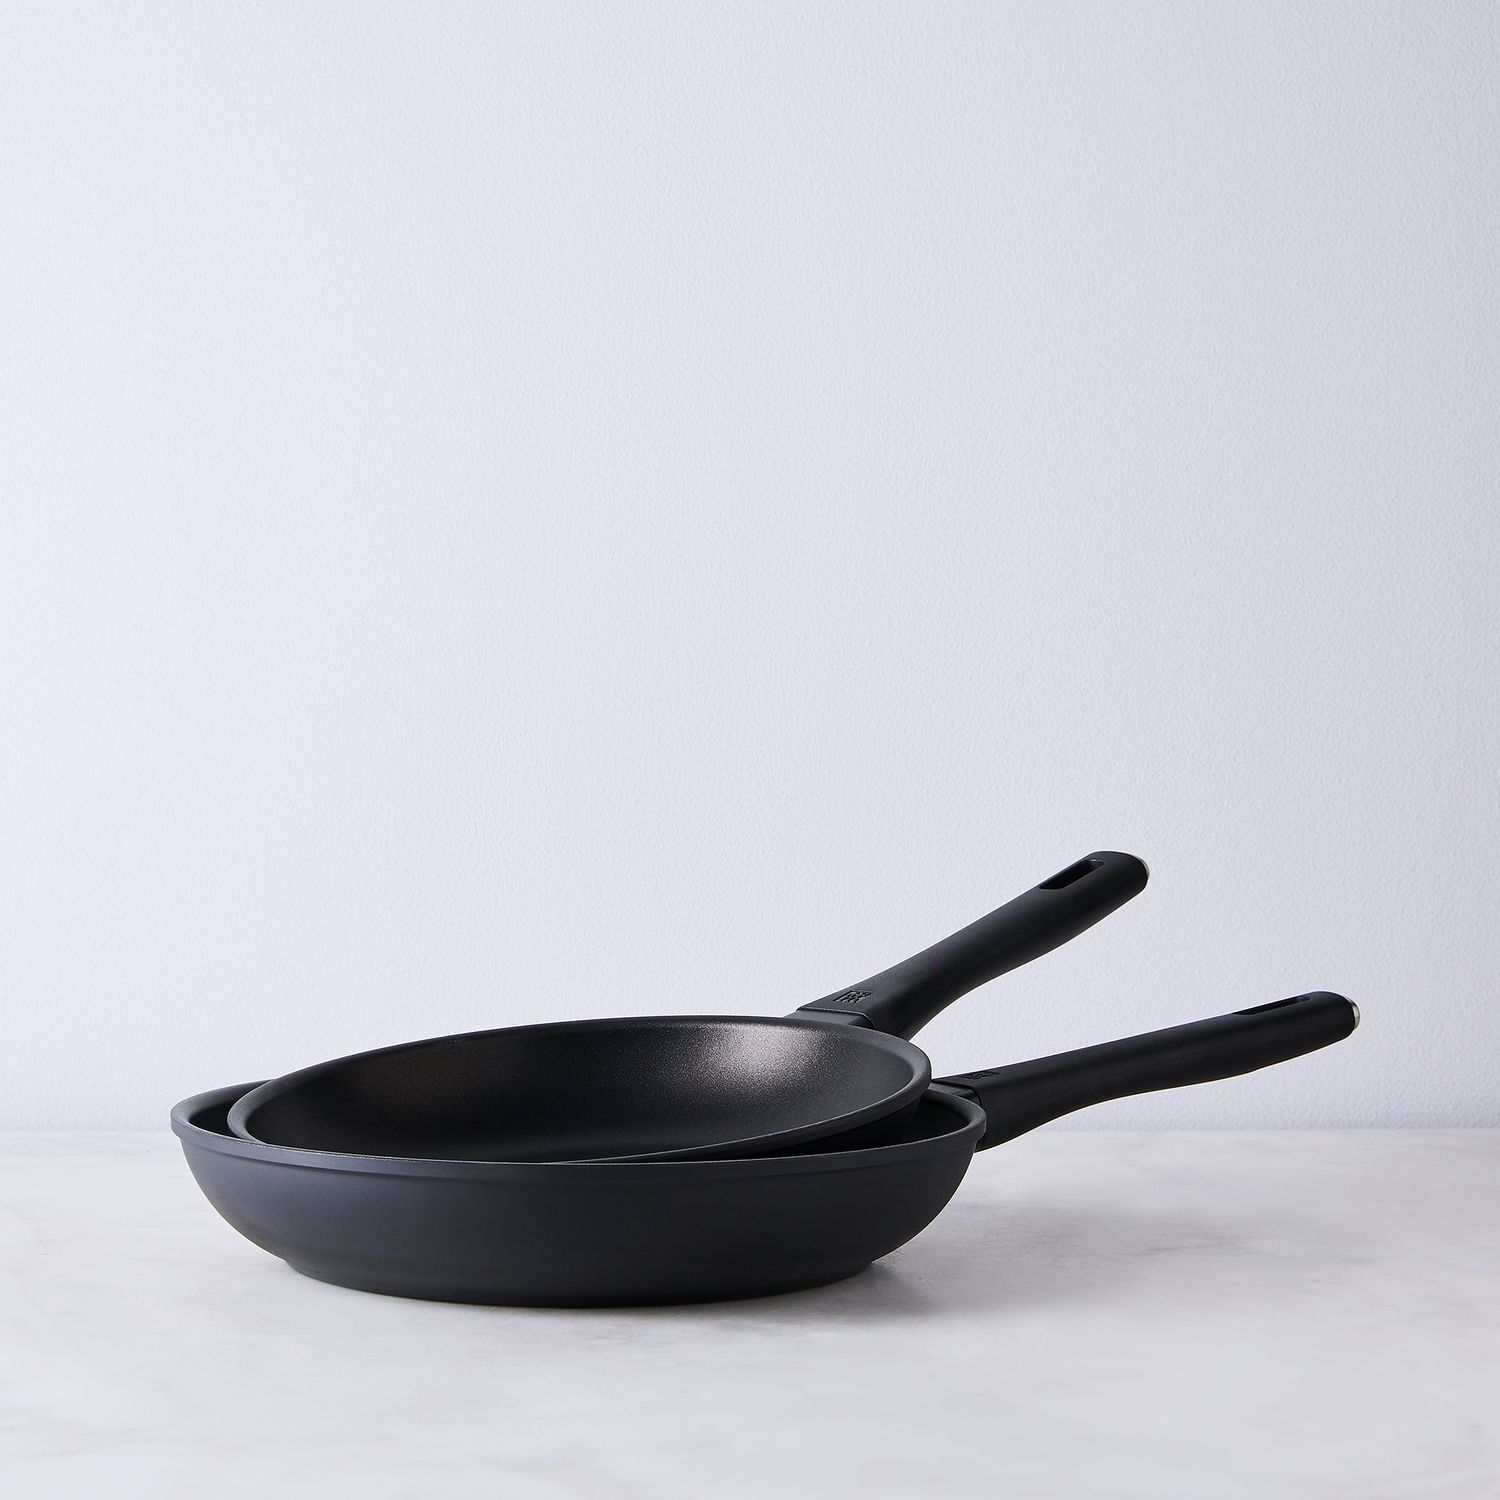 ZWILLING Madura Plus Slate 8-inch Nonstick Fry Pan, 8-inch - Gerbes Super  Markets